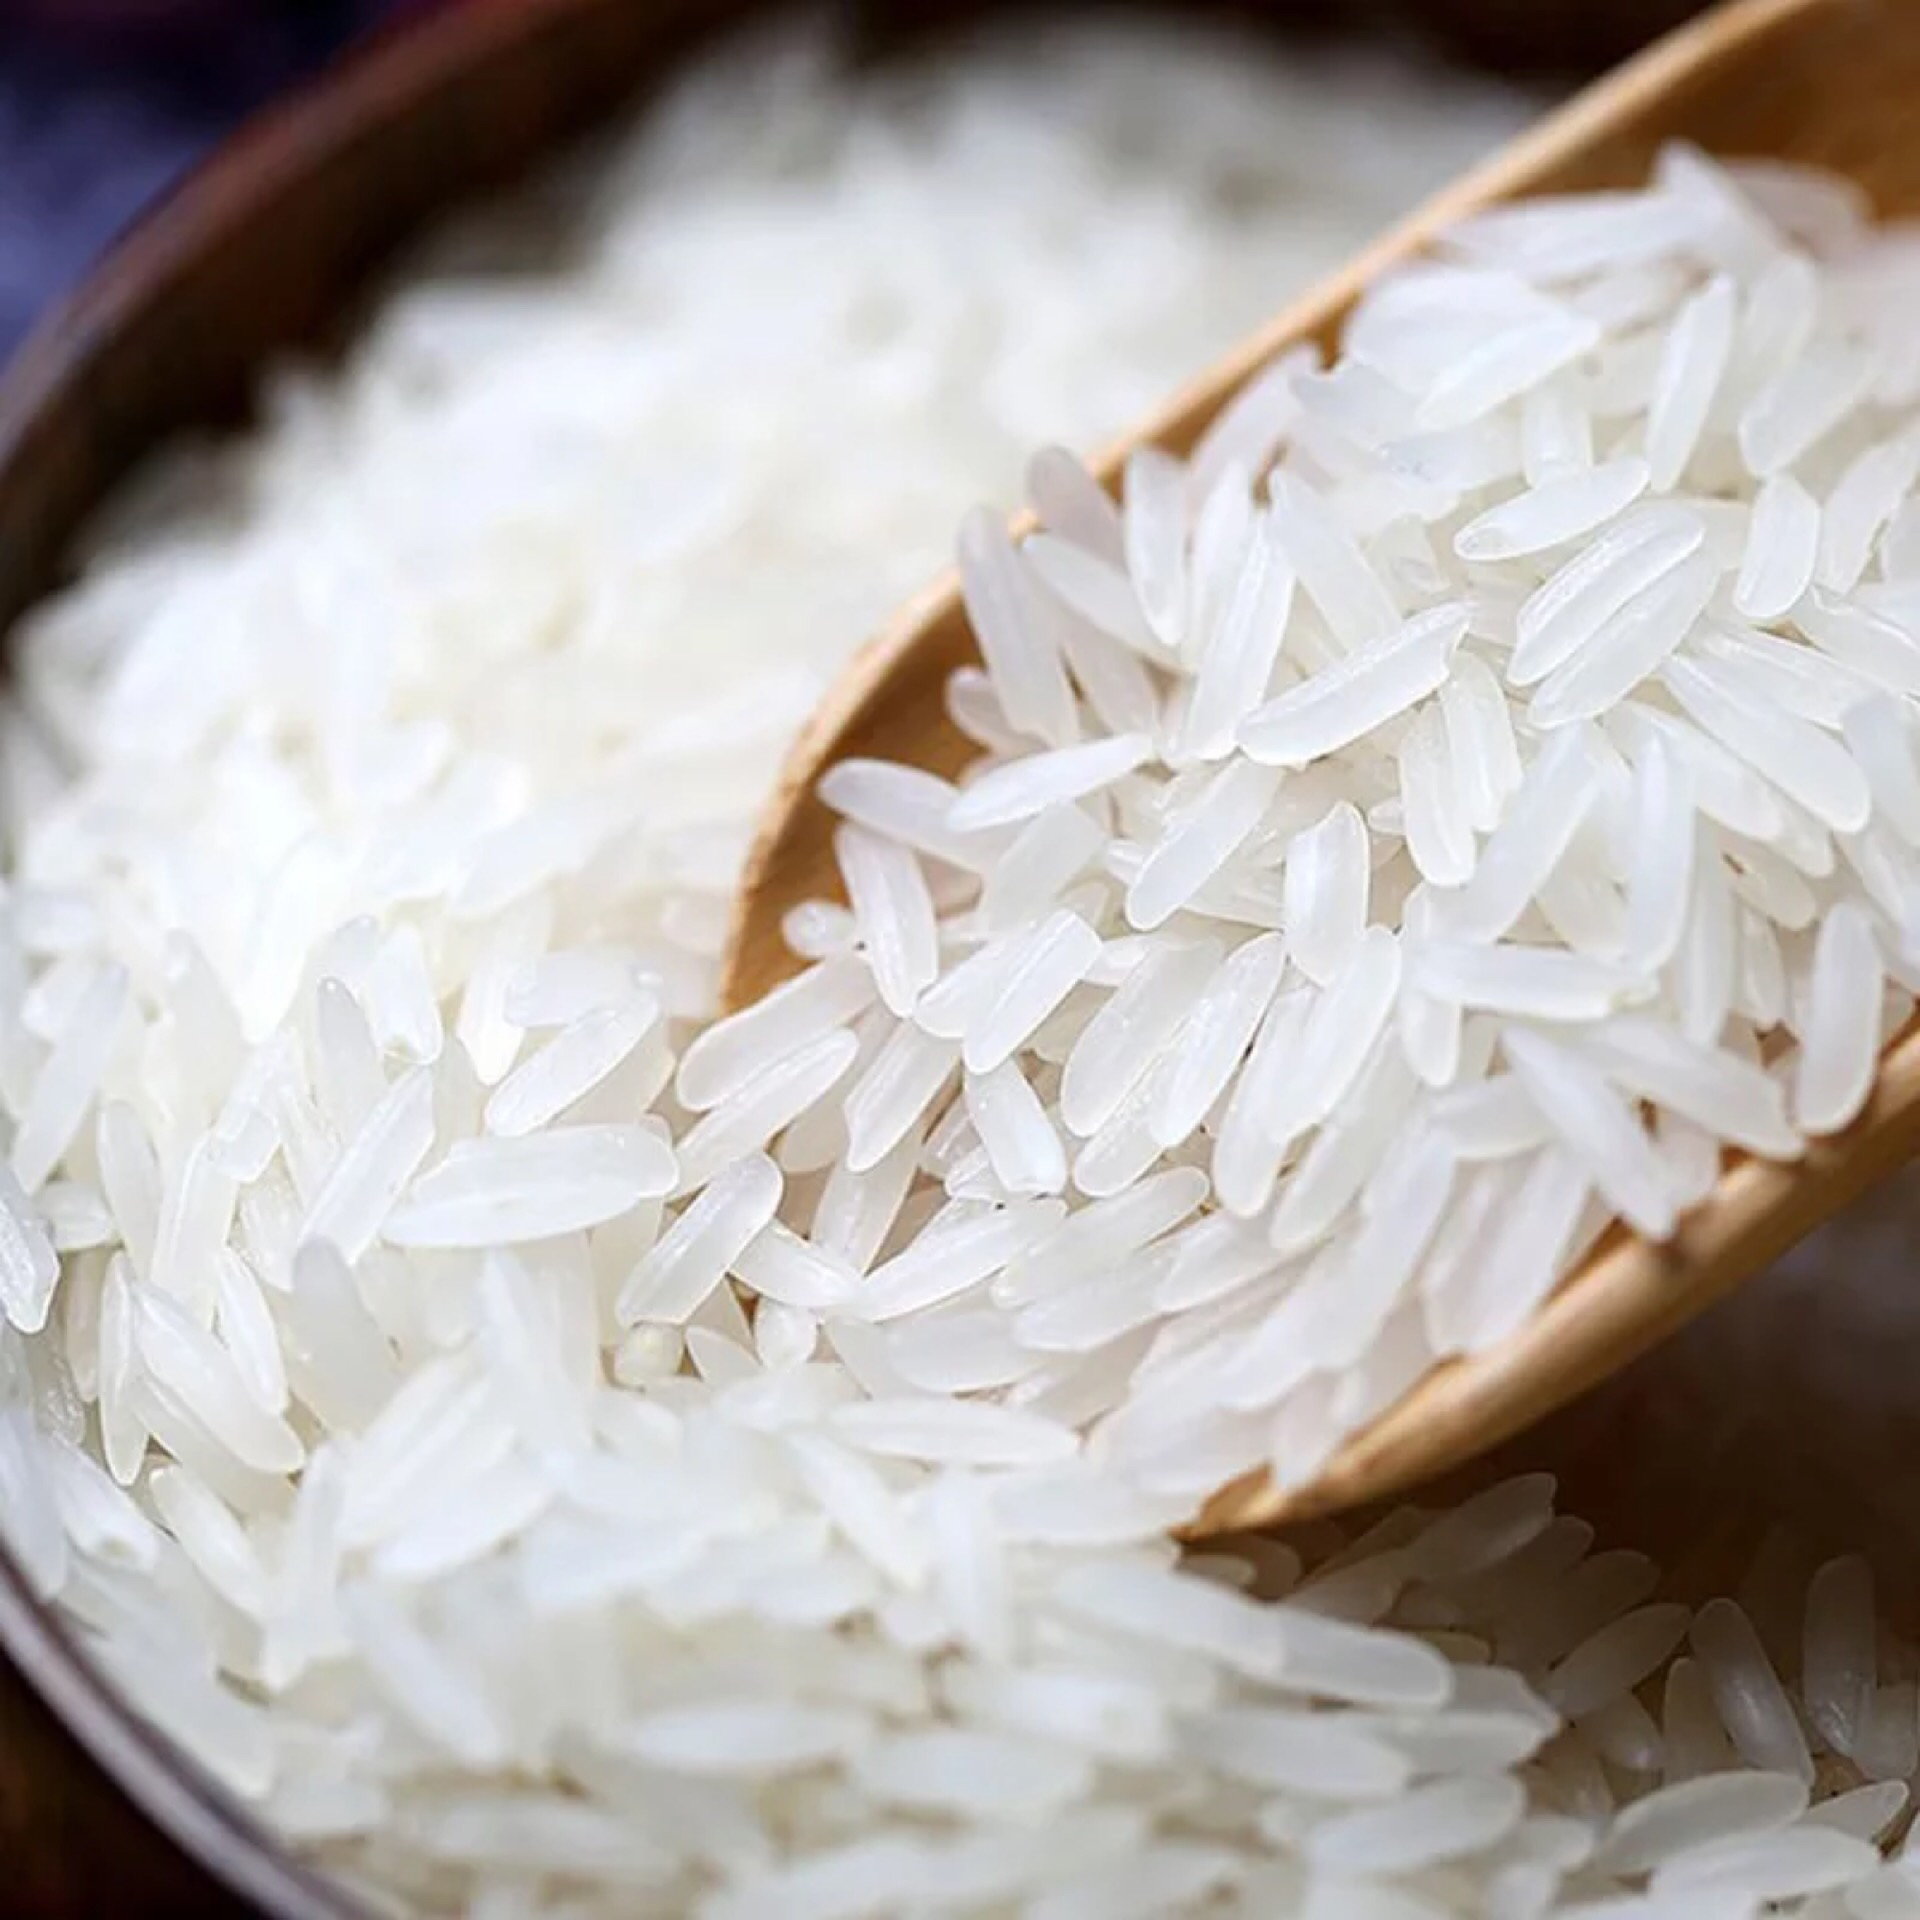 Thai rice export growth